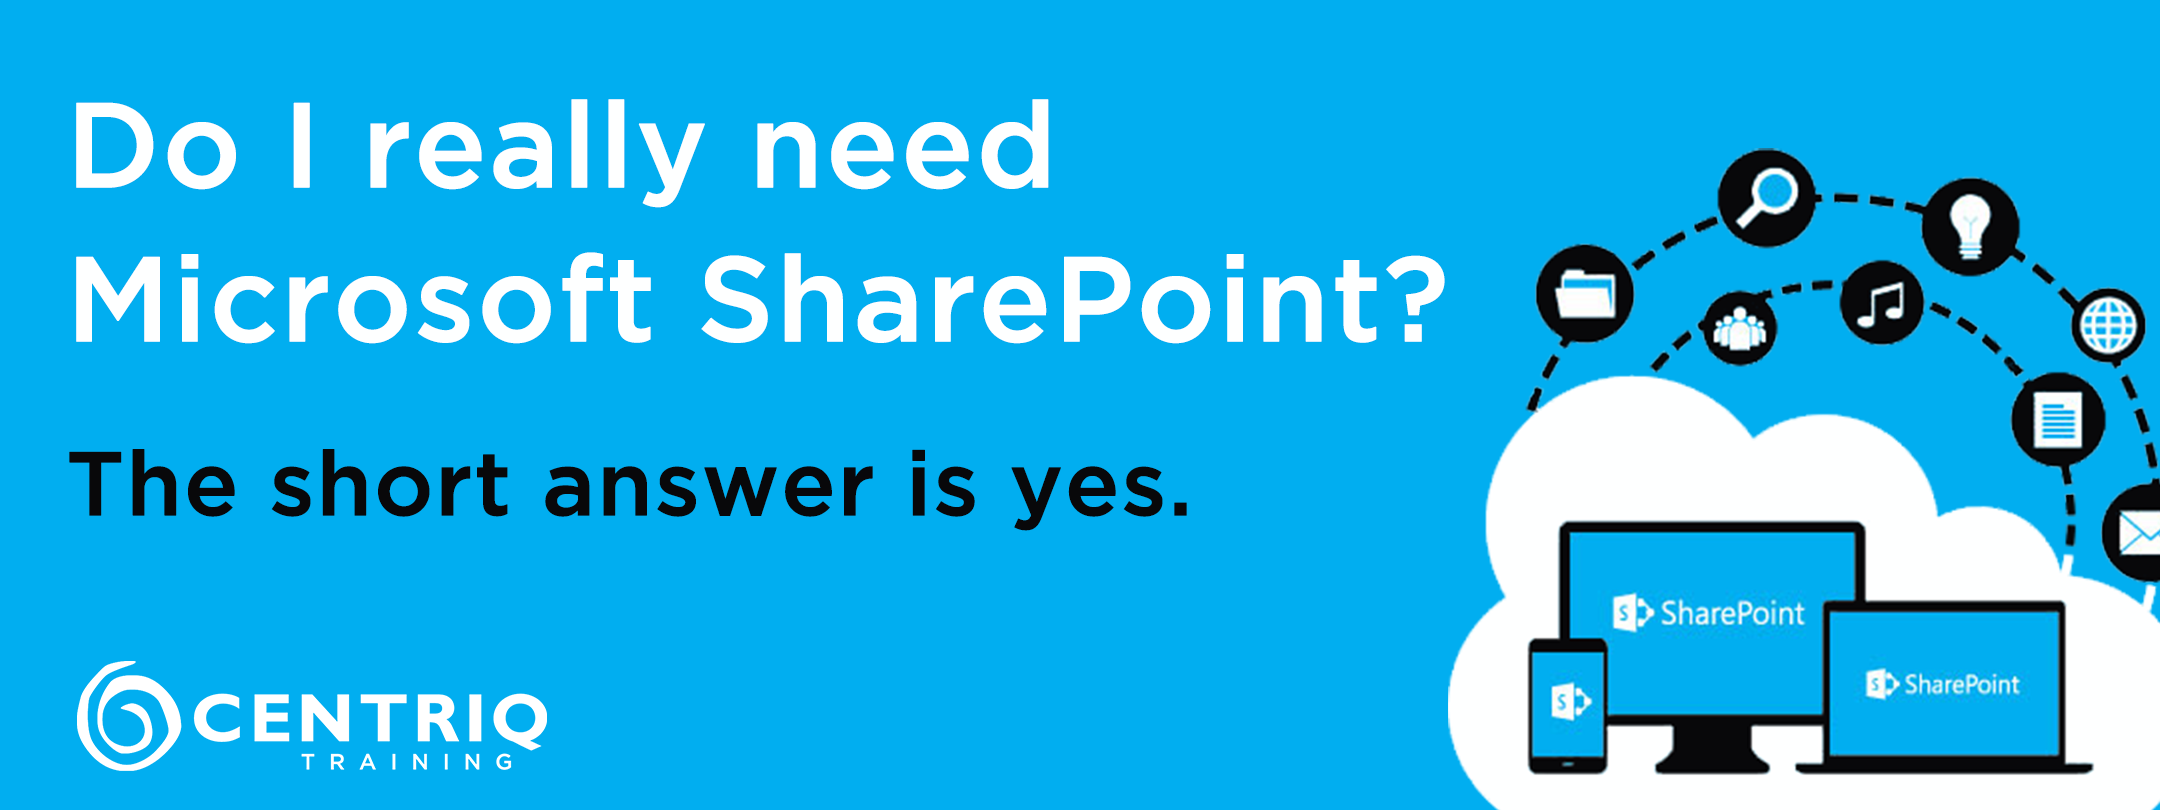 Do I really need Microsoft SharePoint?